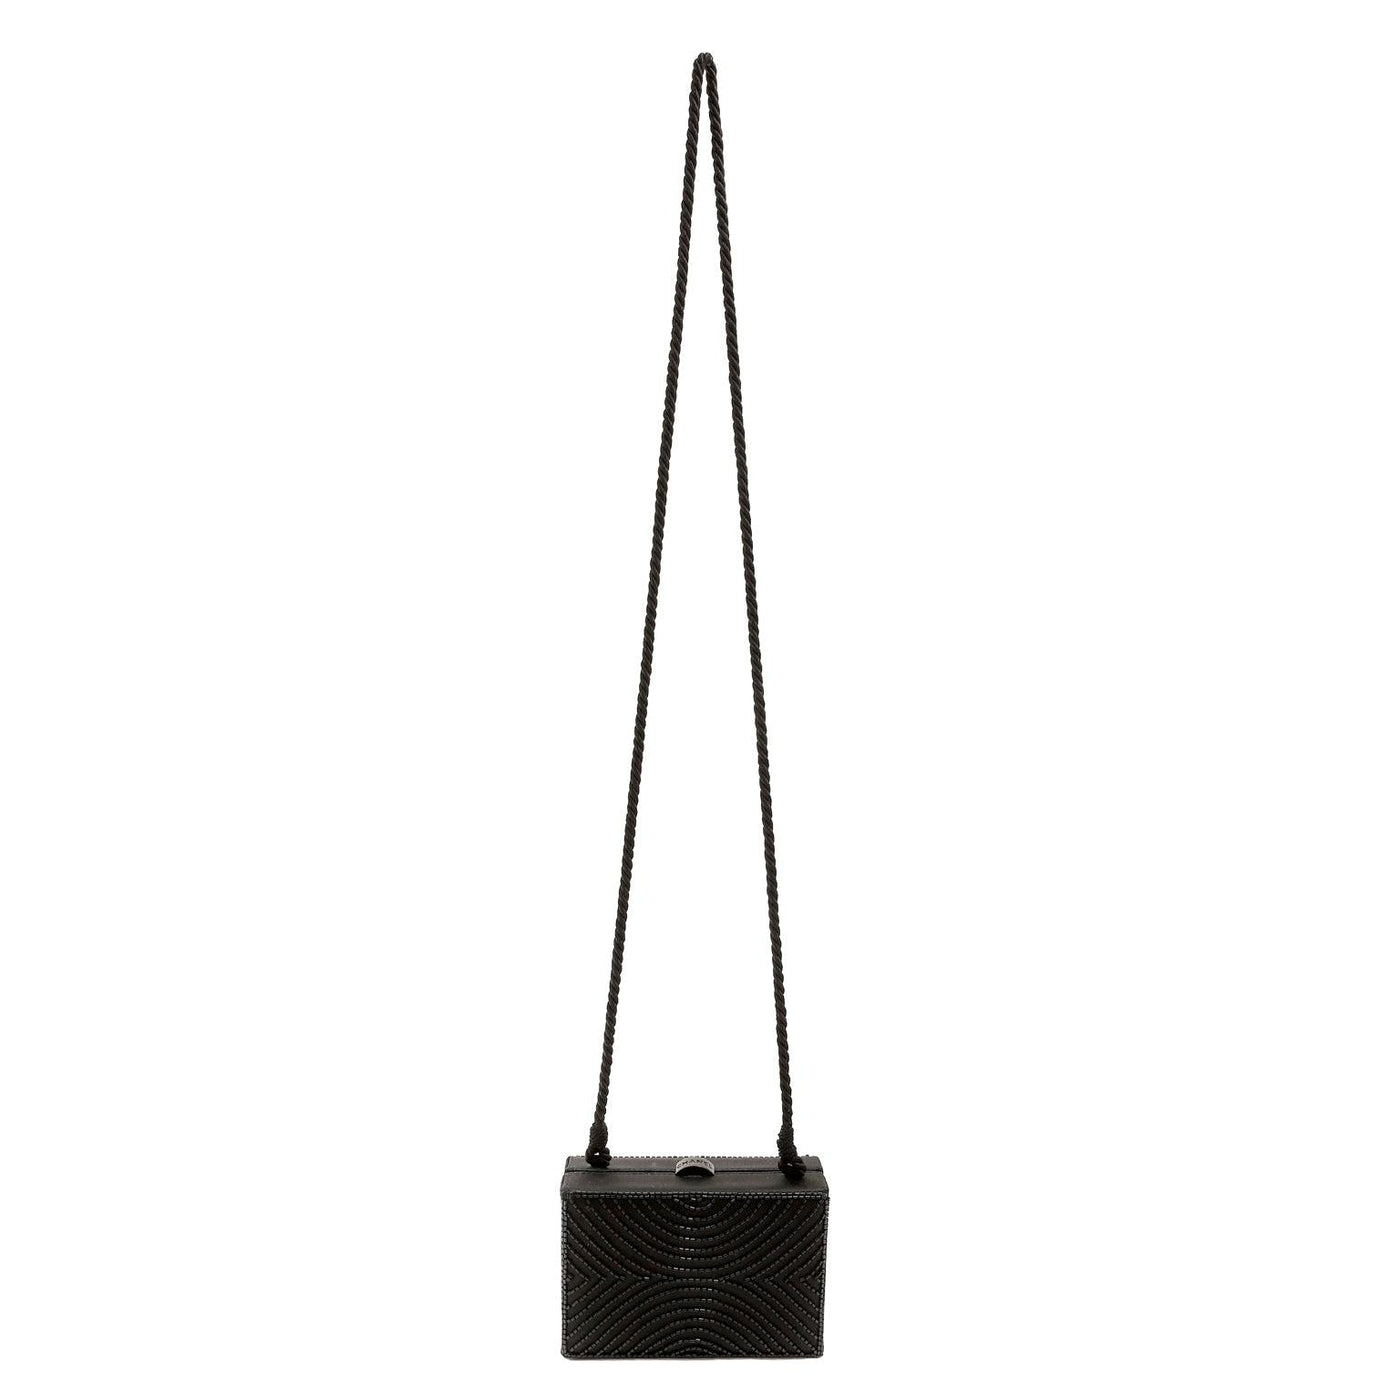 Chanel Black Vintage Beaded Mini Box Evening Bag - Only Authentics